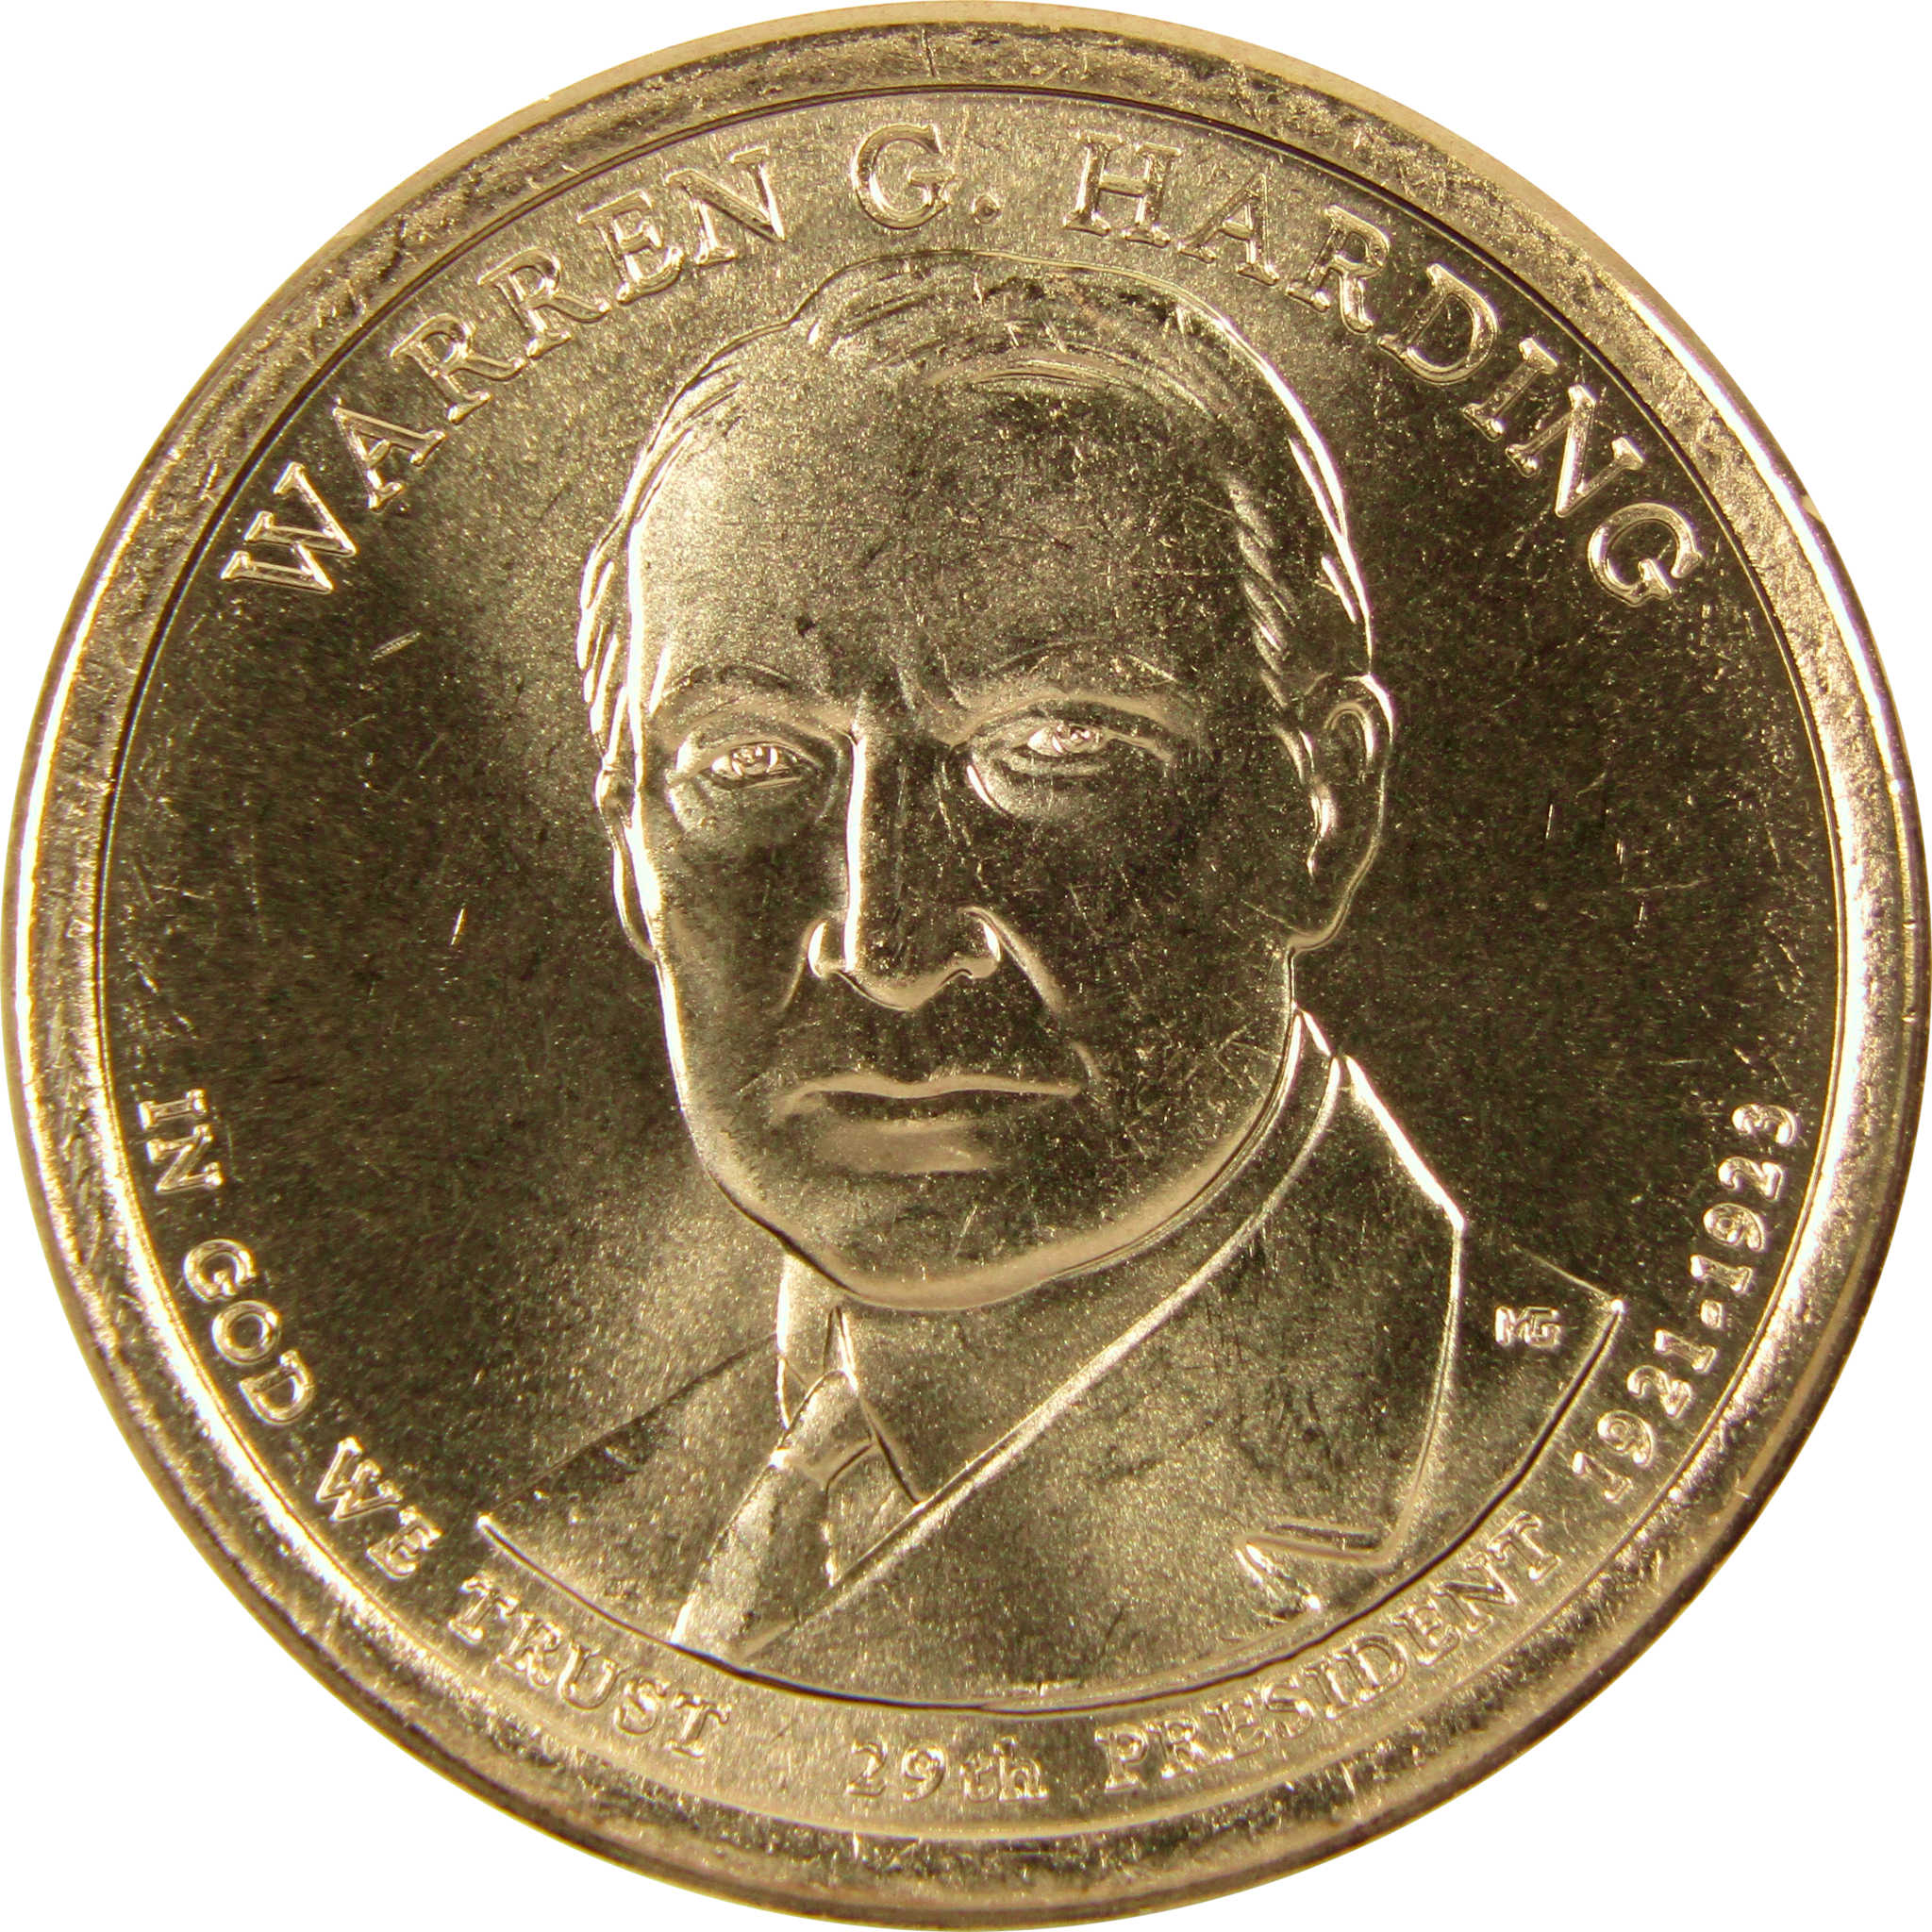 2014 D Warren G Harding Presidential Dollar BU Uncirculated $1 Coin